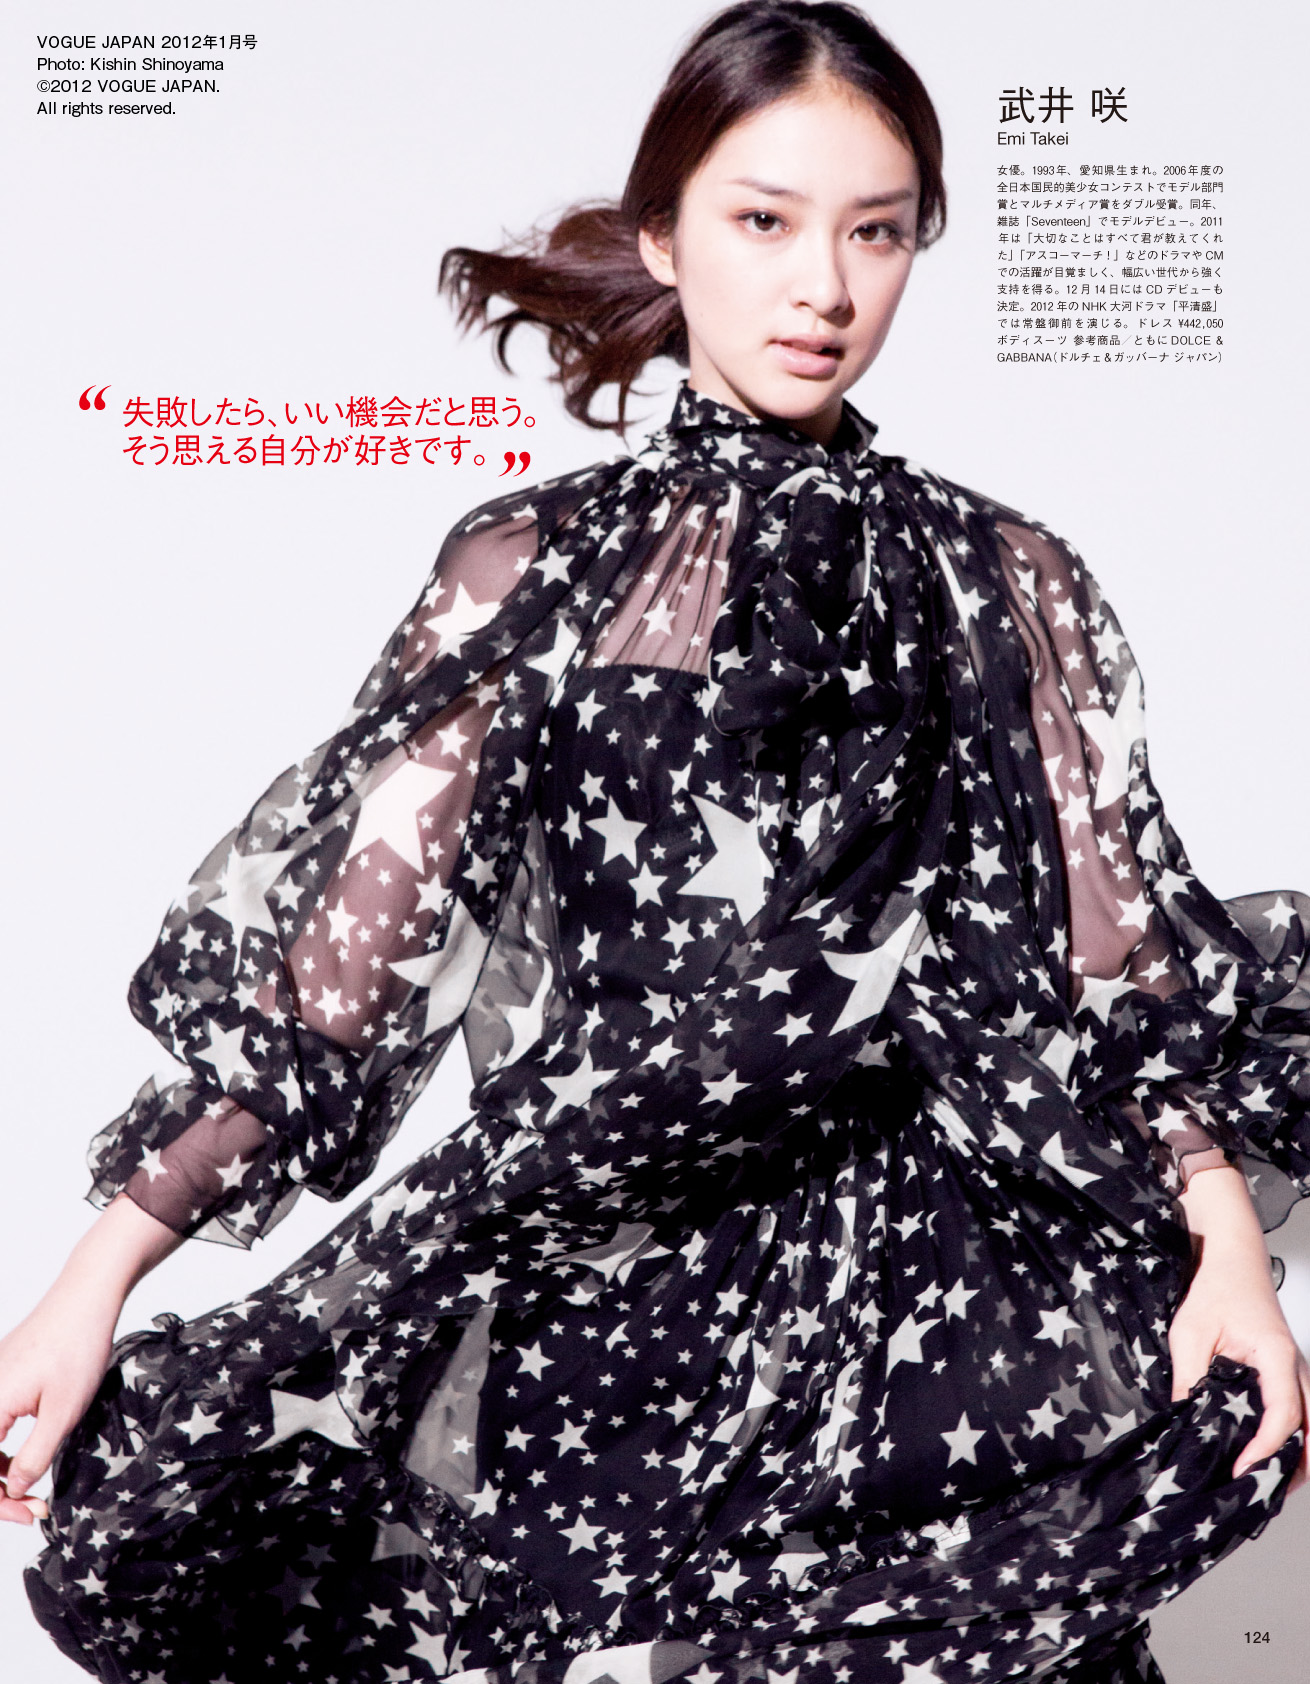 Vogue Japan Women Of The Year 11 決定 コンデナスト パブリケーションズ ジャパンのプレスリリース